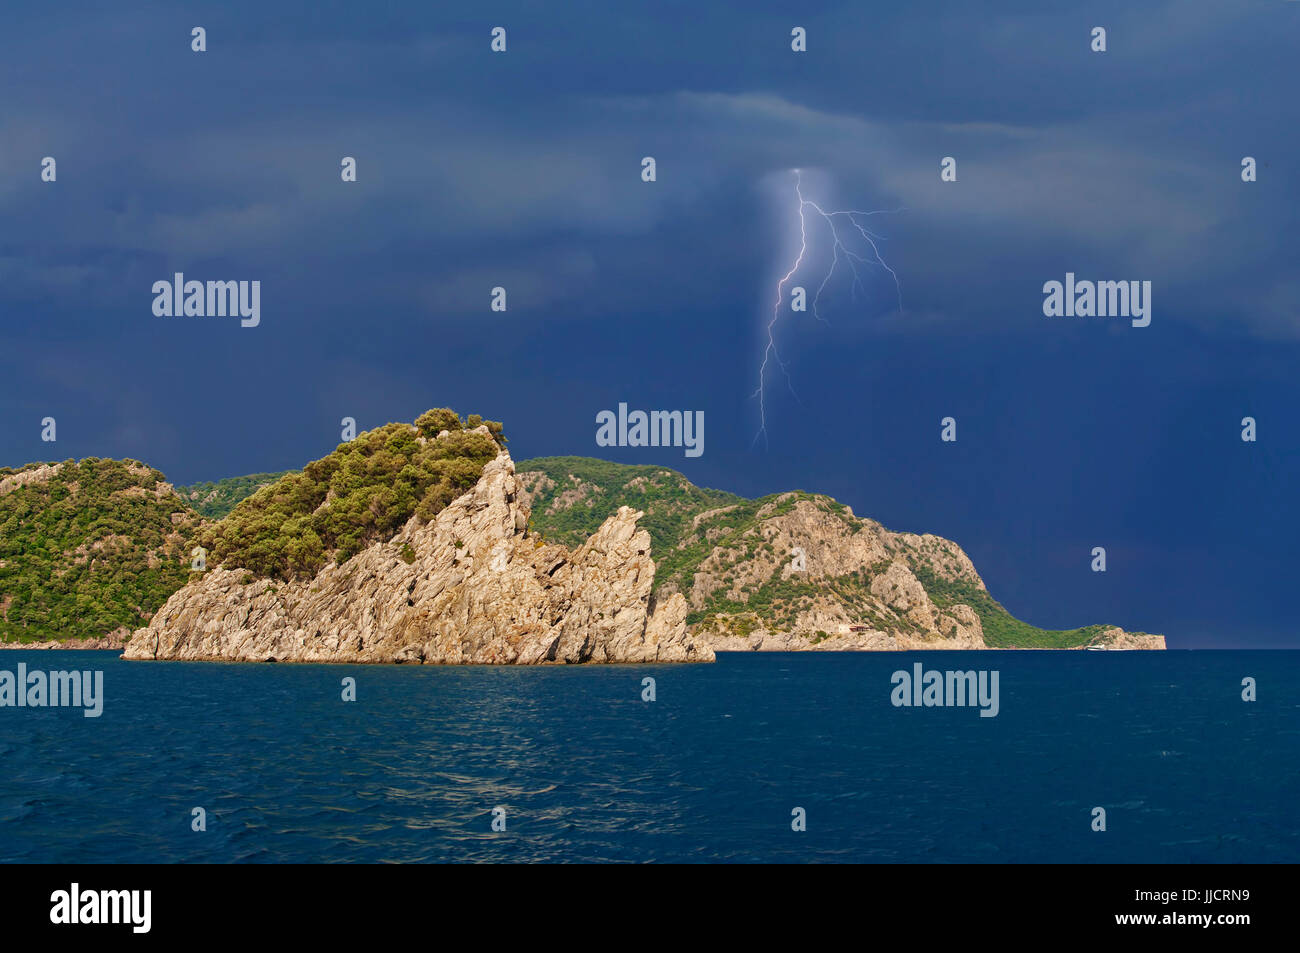 lightning striking over sunlit rocky island during thunderstorm in Aegean sea near Marmaris, Turkey Stock Photo